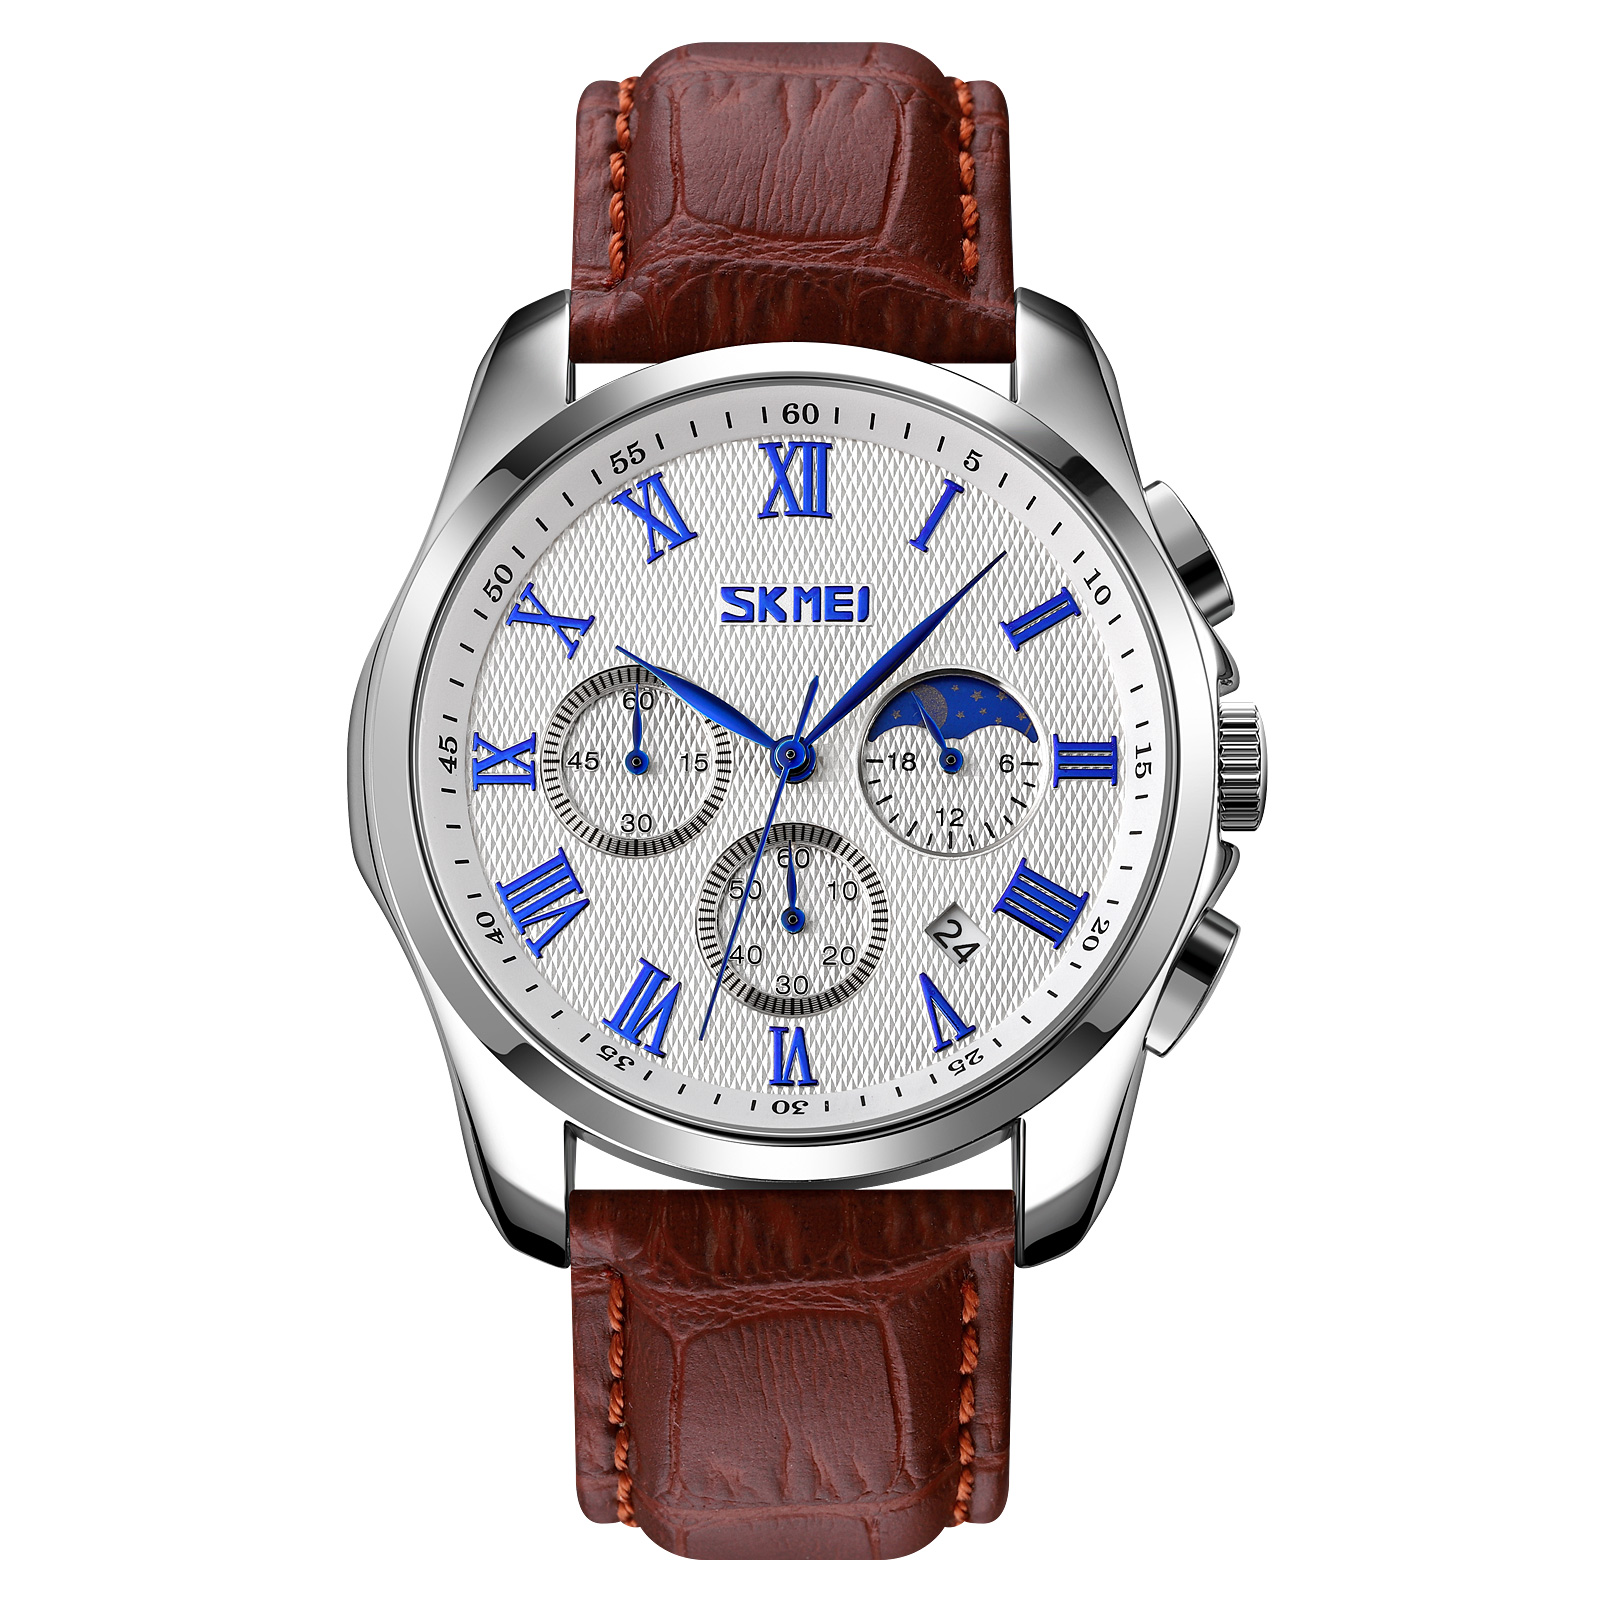 watch suppliers-Skmei Watch Manufacture Co.,Ltd